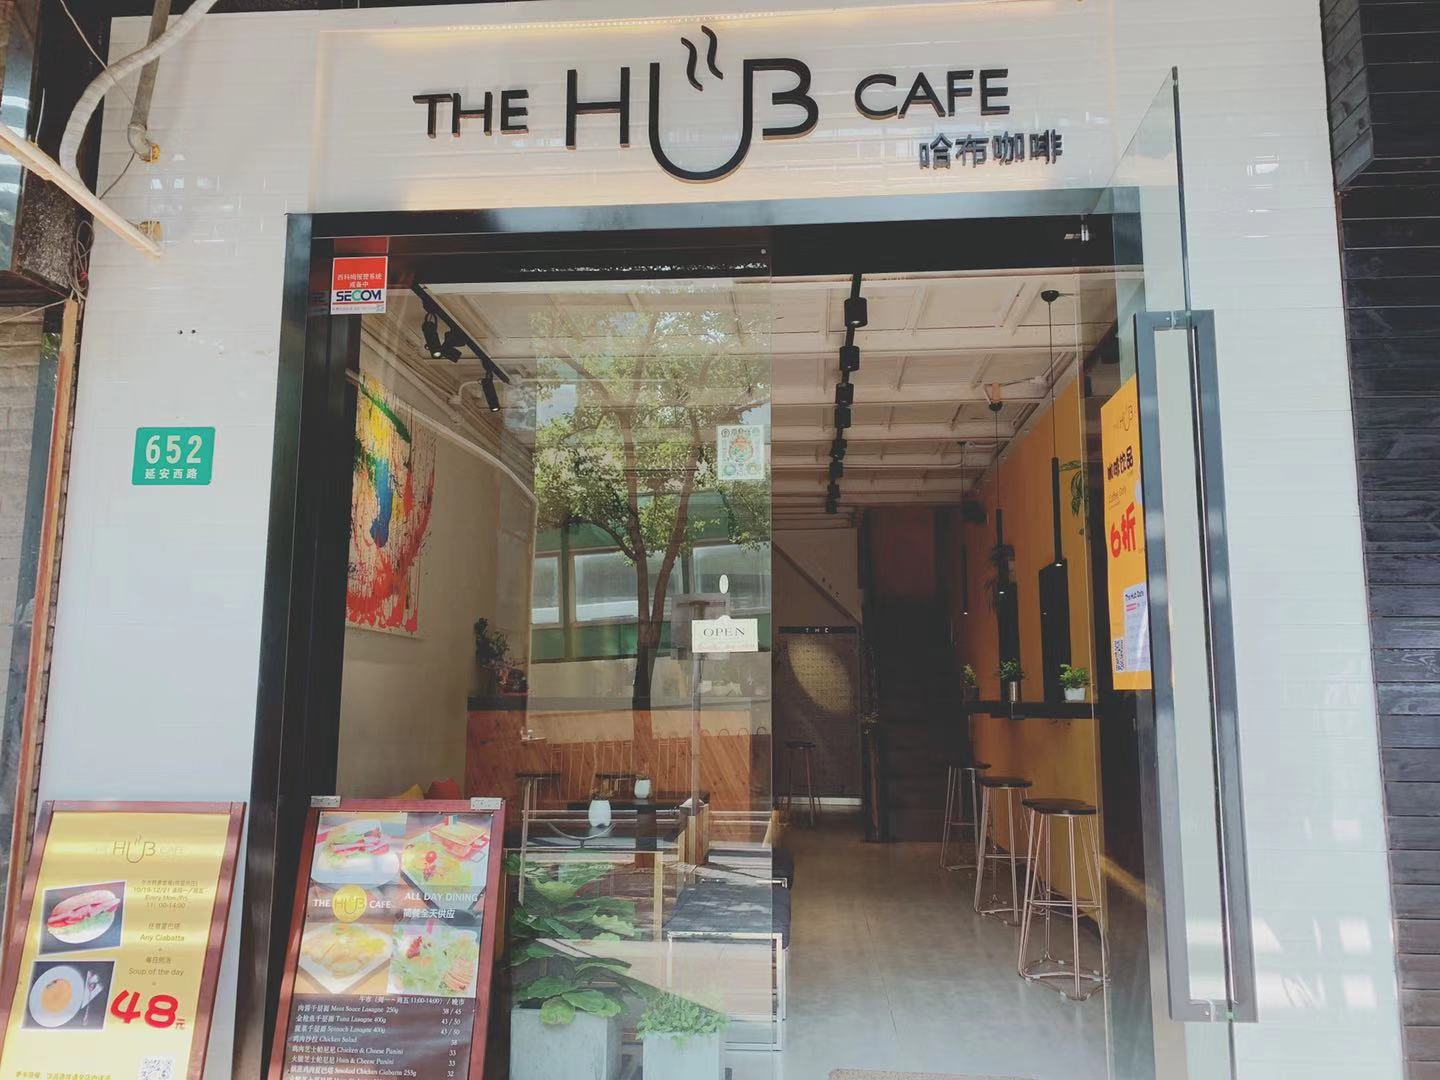 THE HUB CAFE